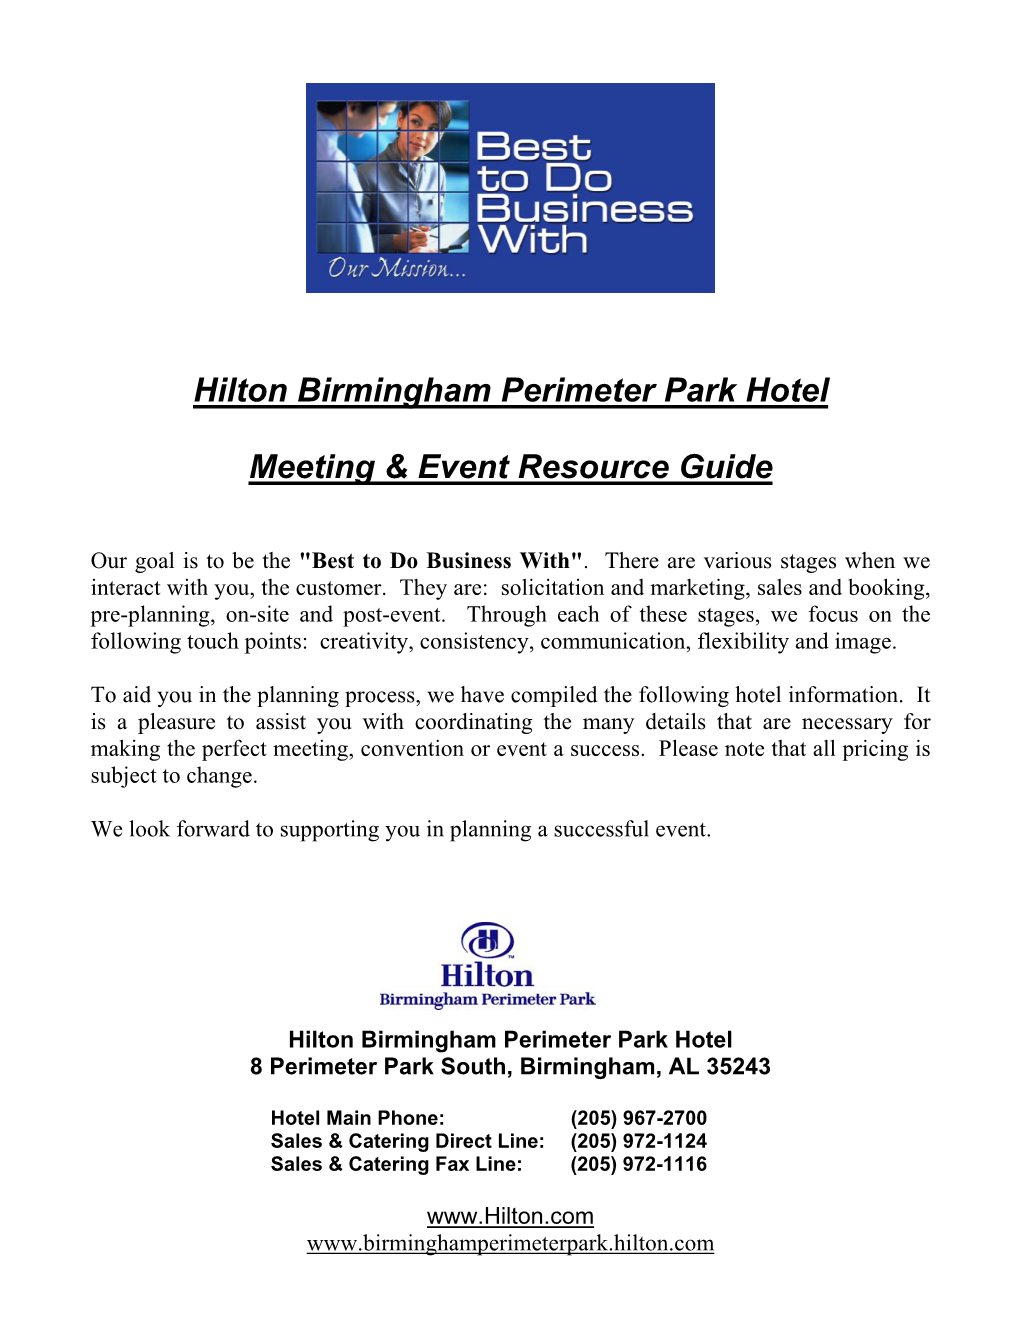 Hilton Birmingham Perimeter Park Hotel Meeting & Event Resource Guide